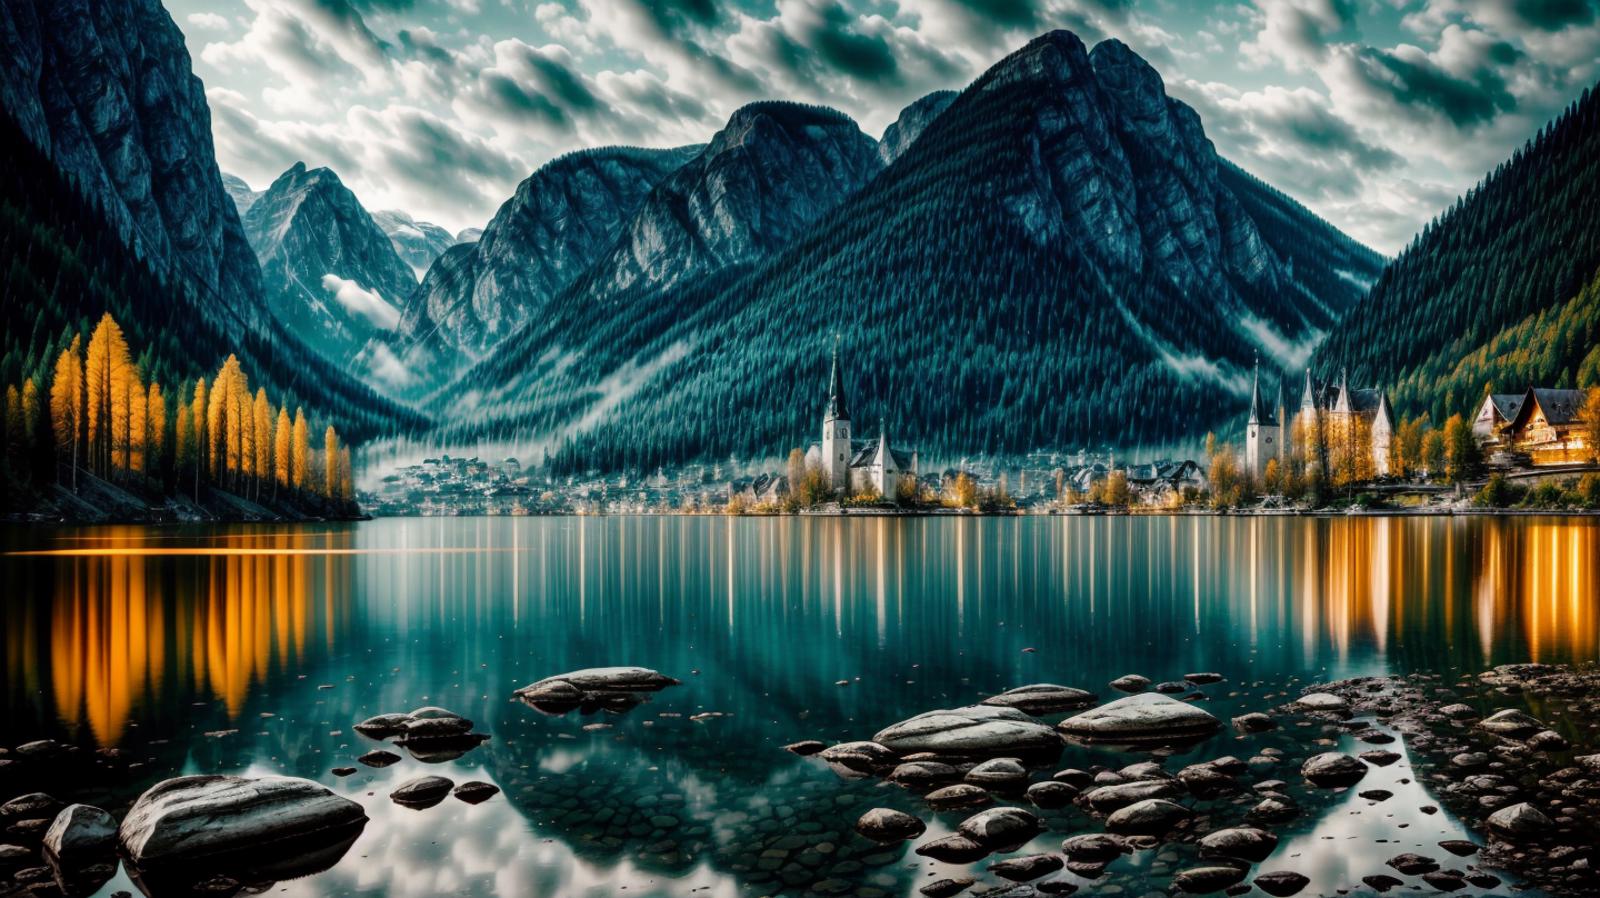 Landscape Realistic Pro image by Atryda